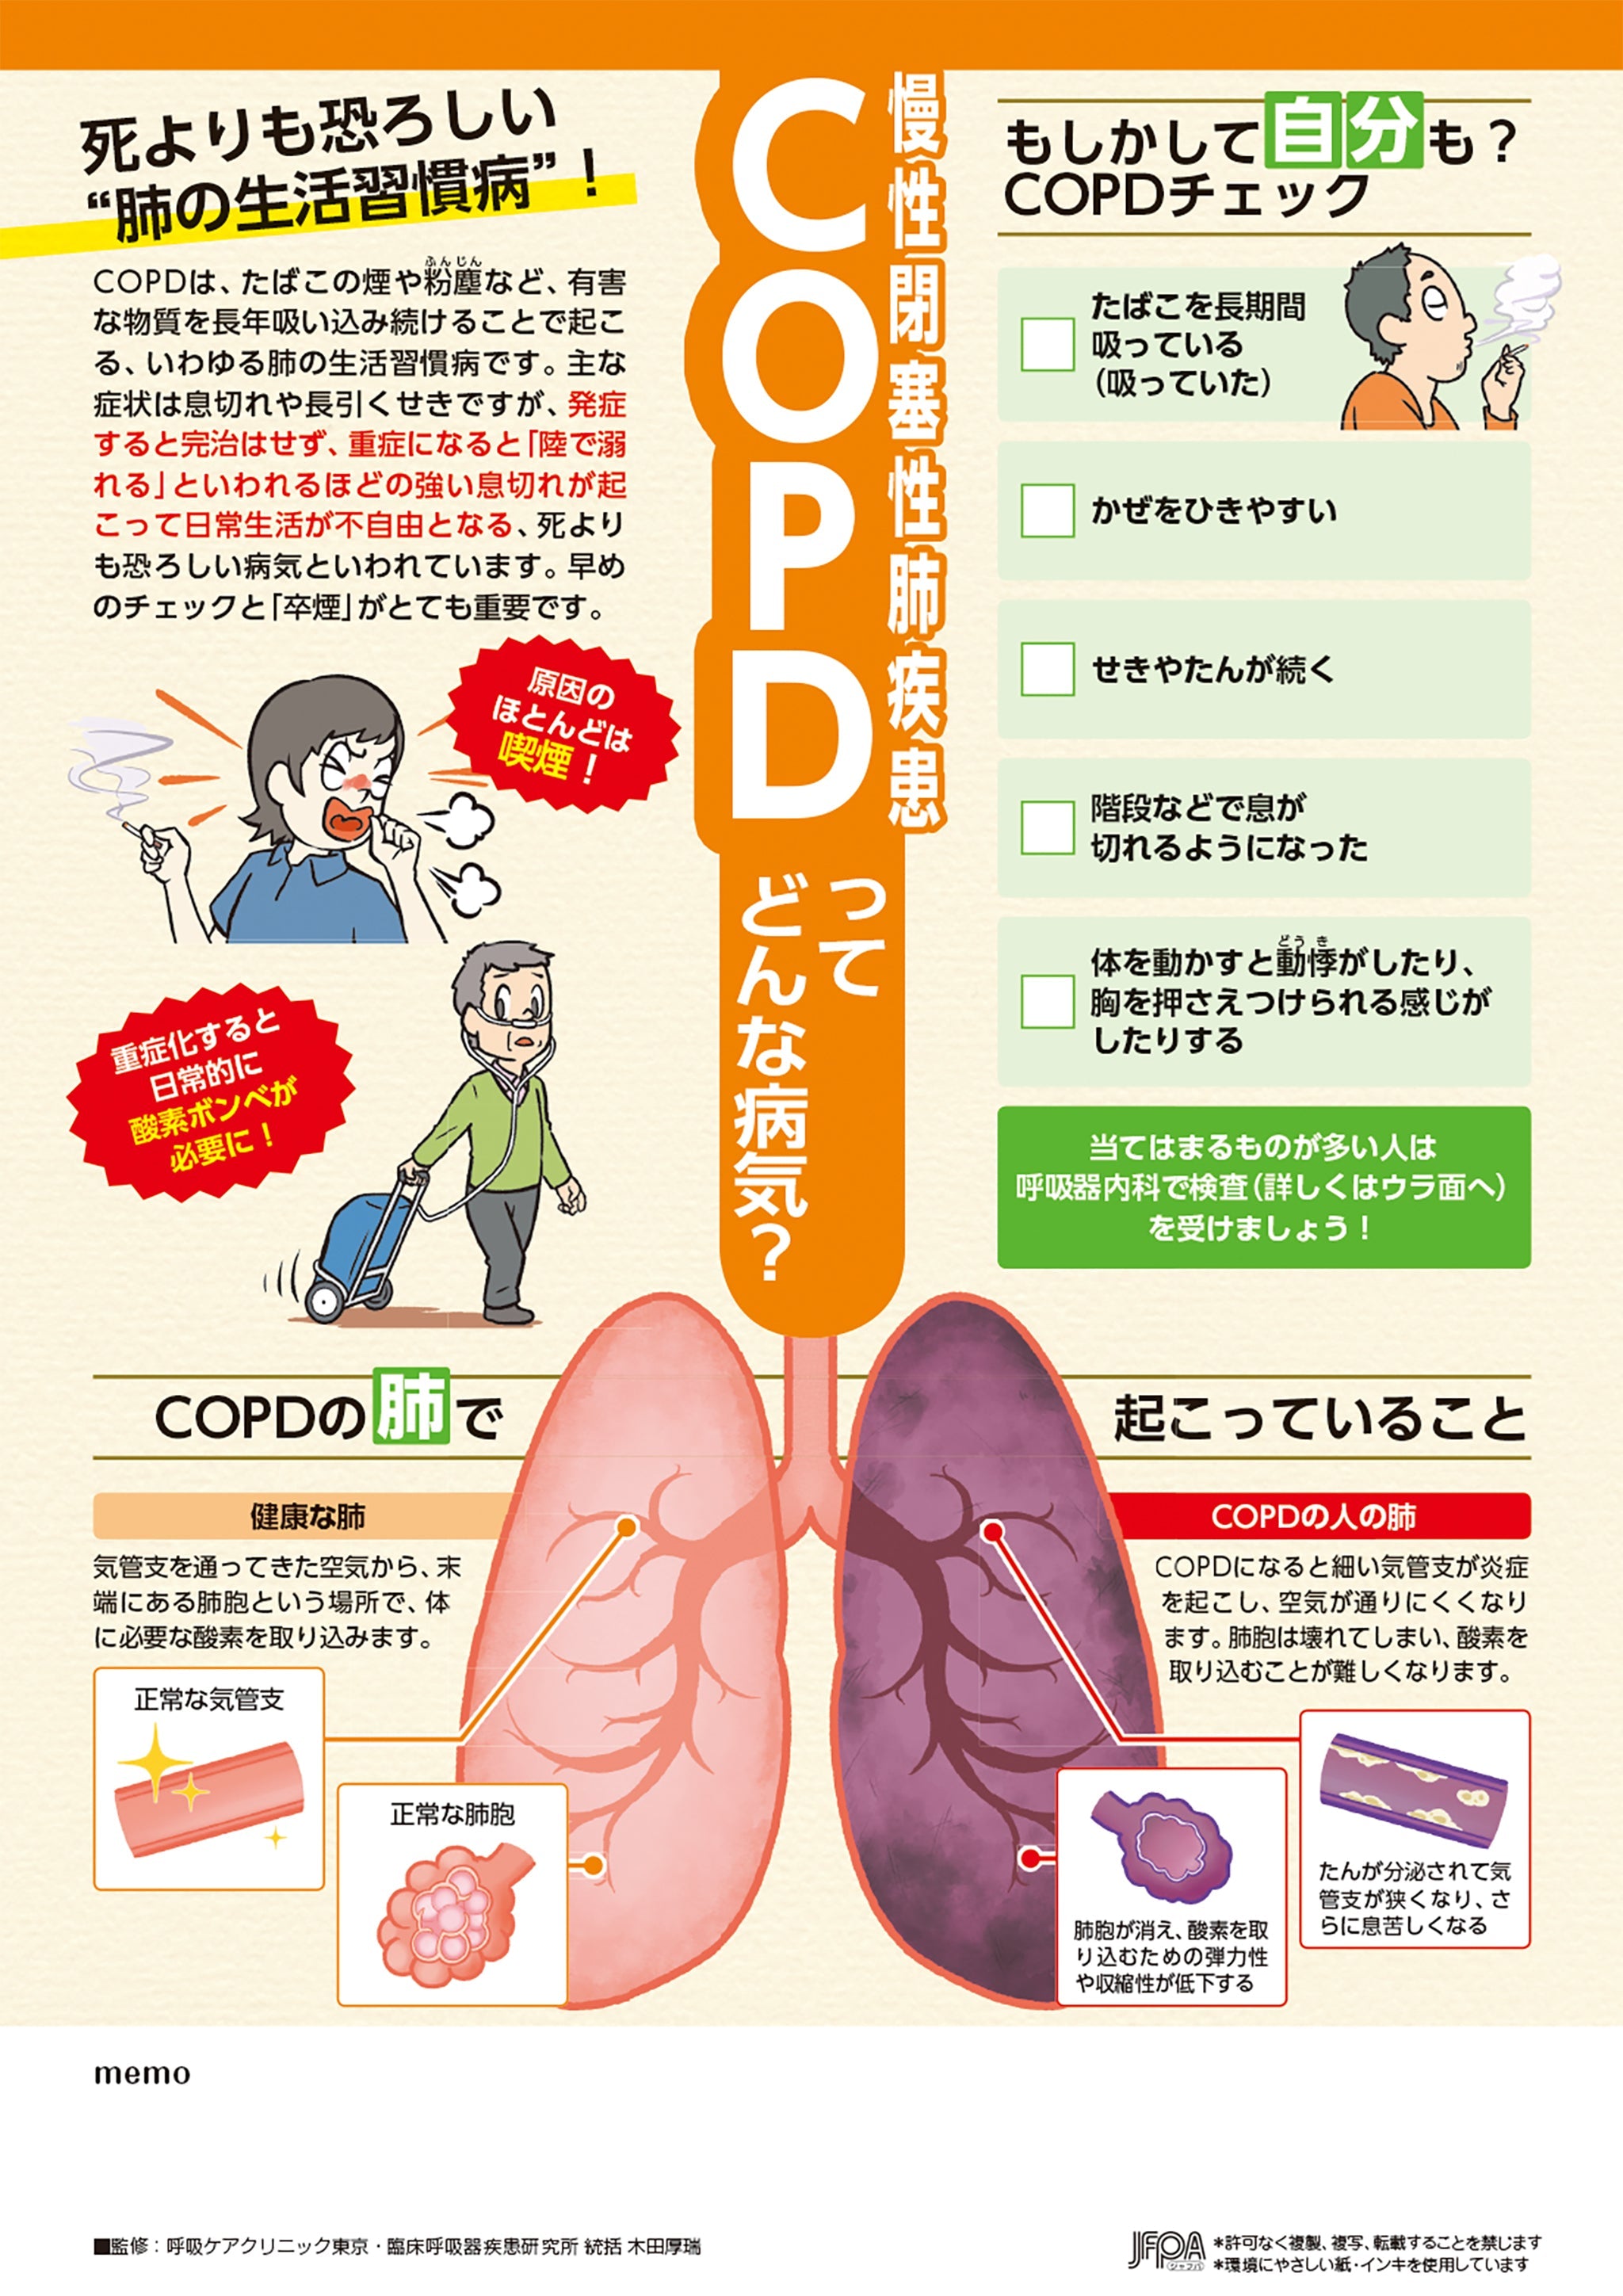 –　COPD（慢性閉塞性肺疾患）ってどんな病気？　JFPA®オンラインショップ